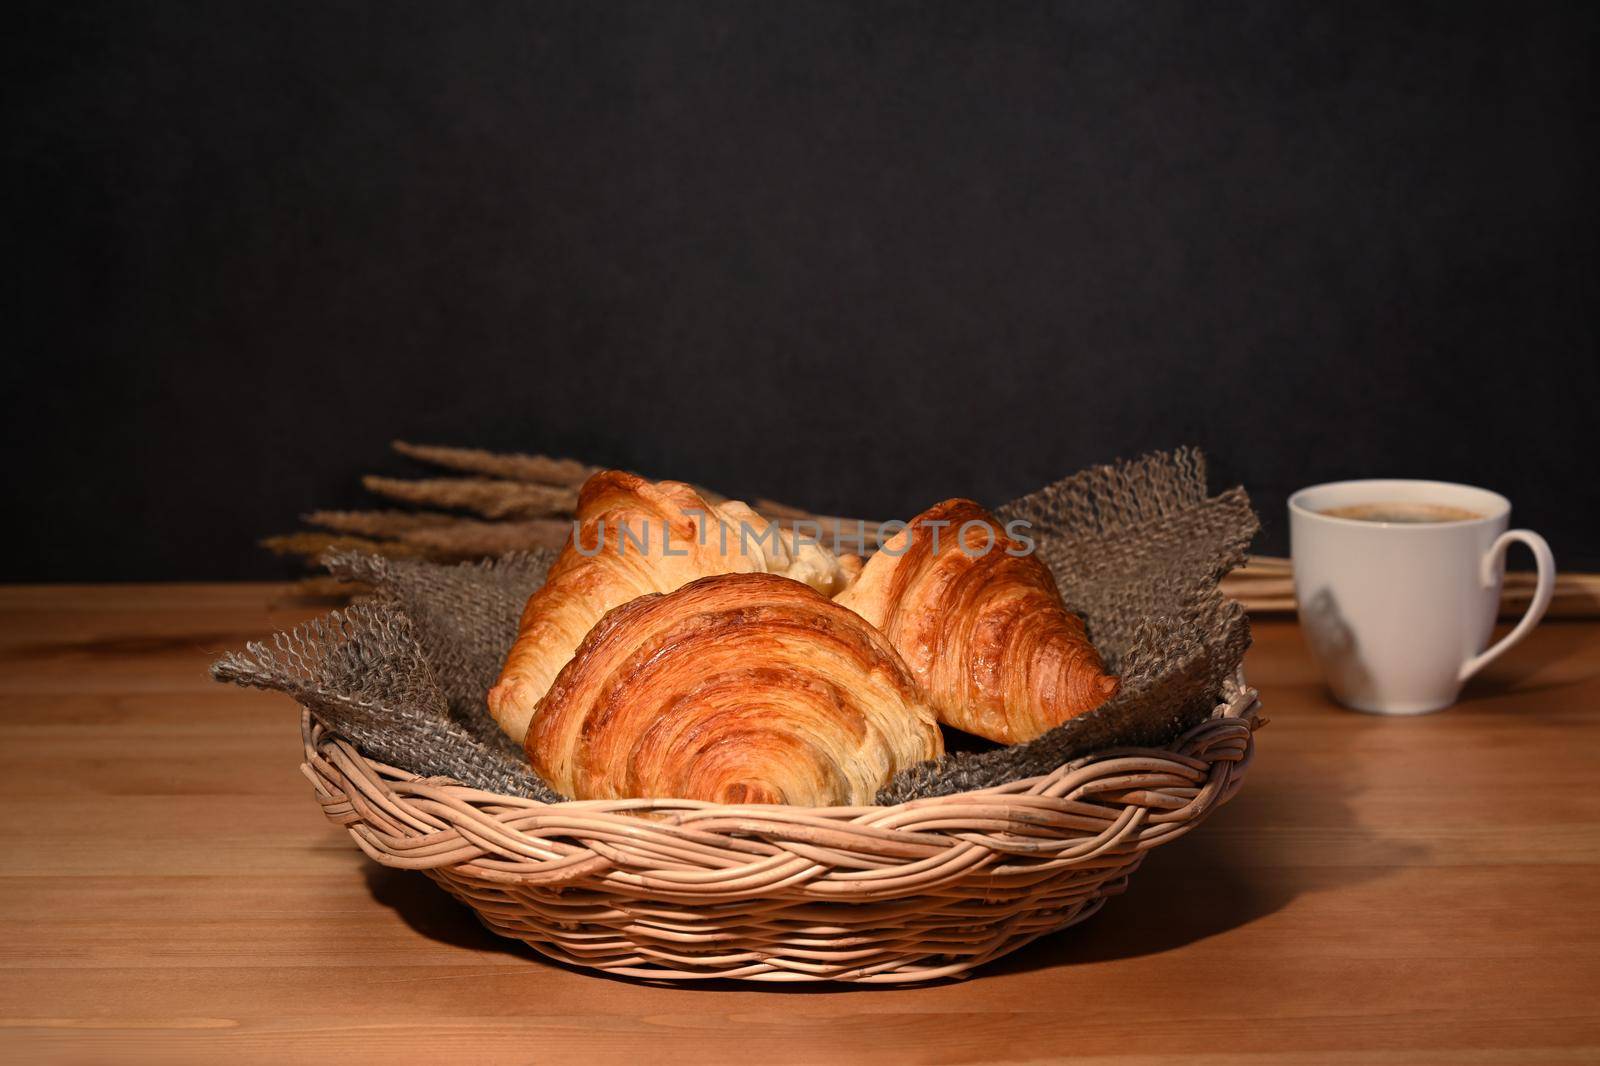 Warm fresh buttery croissants in wicker basket. Breakfast, bread bakery products cafe concept by prathanchorruangsak